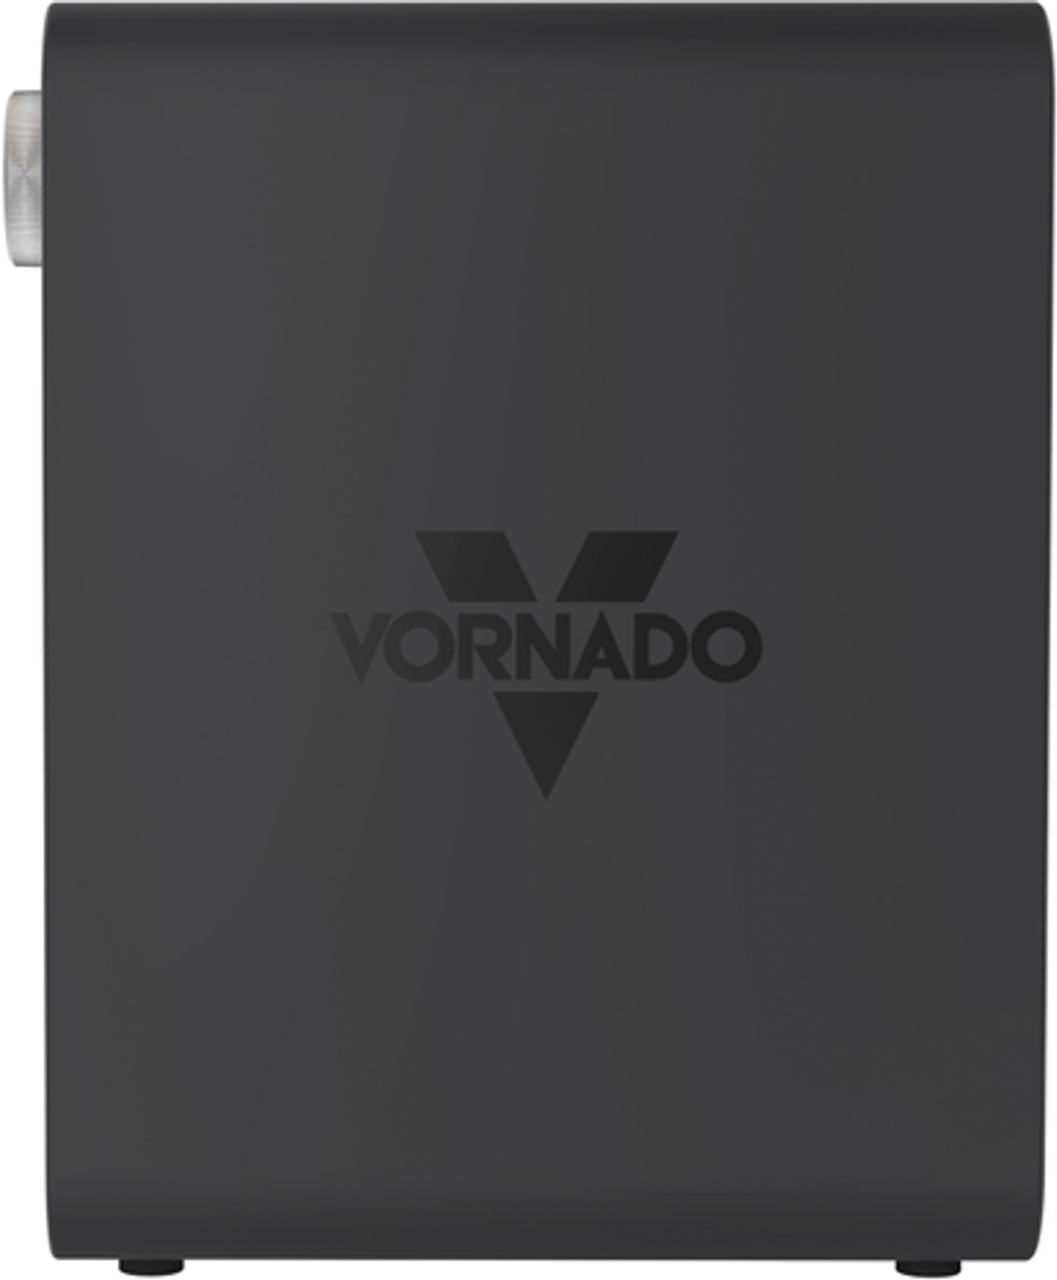 Vornado Whole Room Heater - Storm Gray